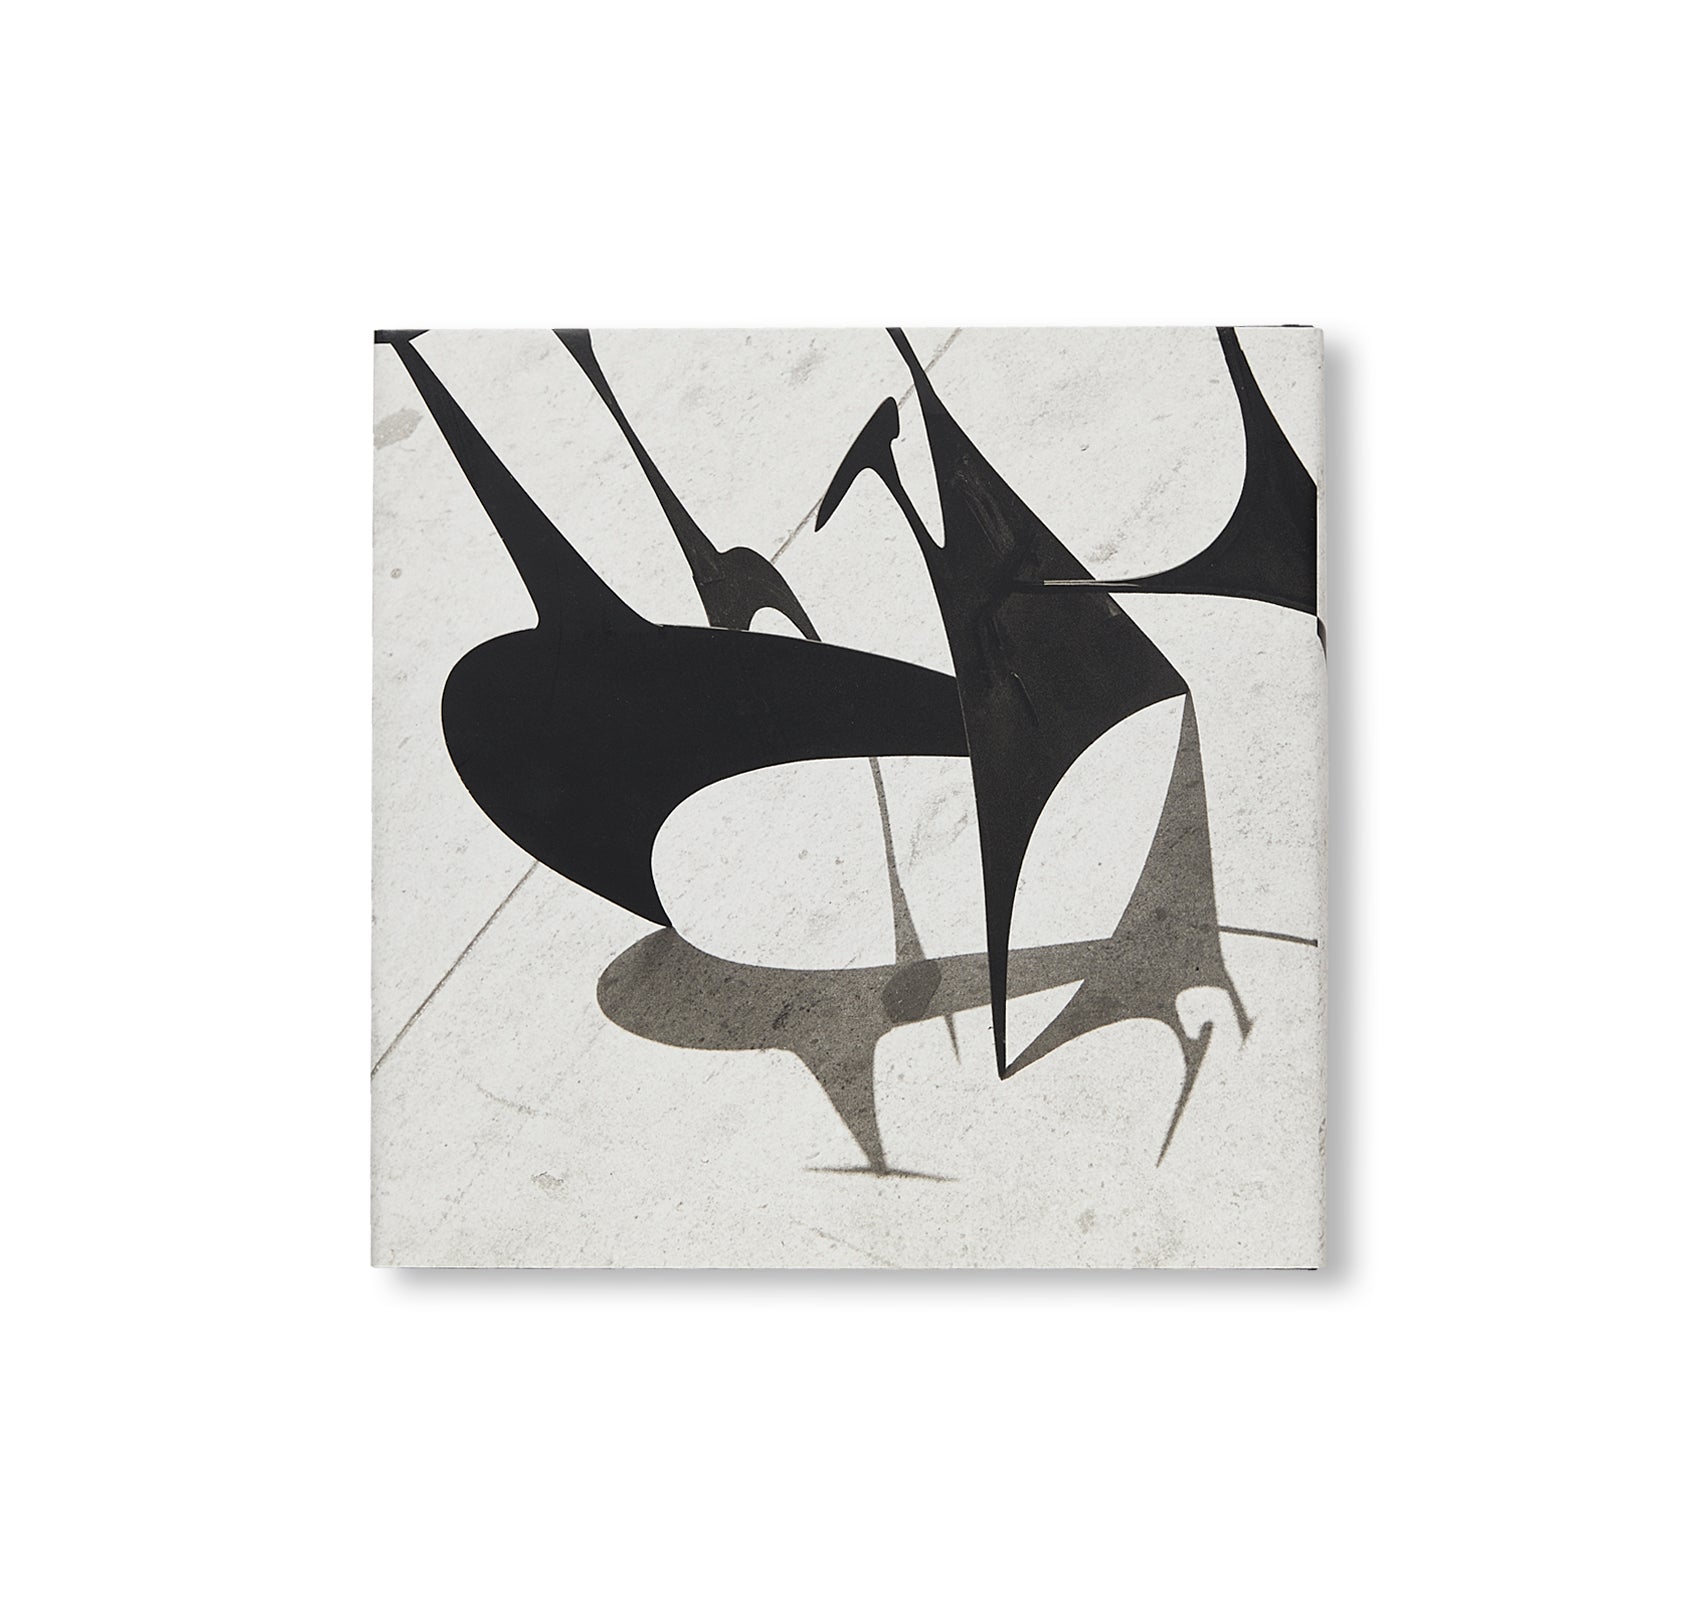 CALDER BY MATTER by Alexander Calder